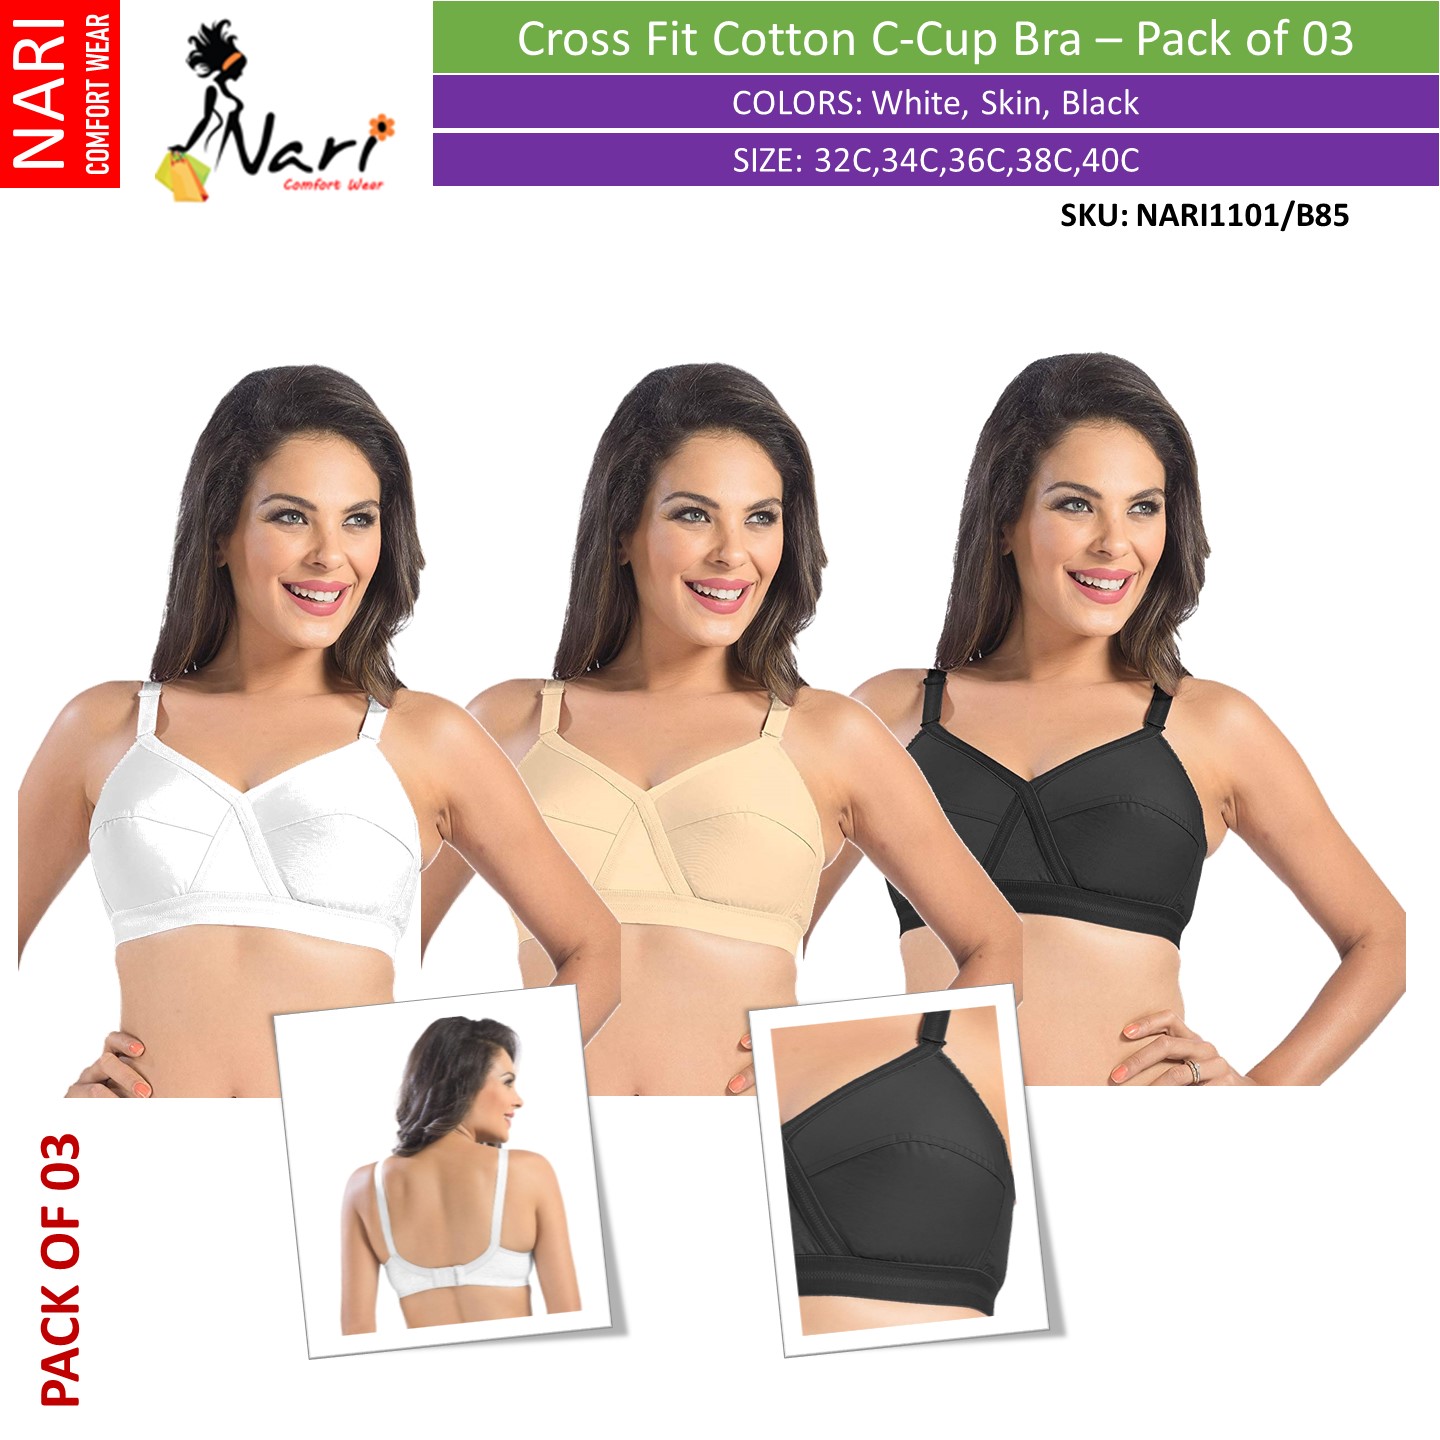 Nari Comfort Wear – Exclusive Lingrie Store for Women